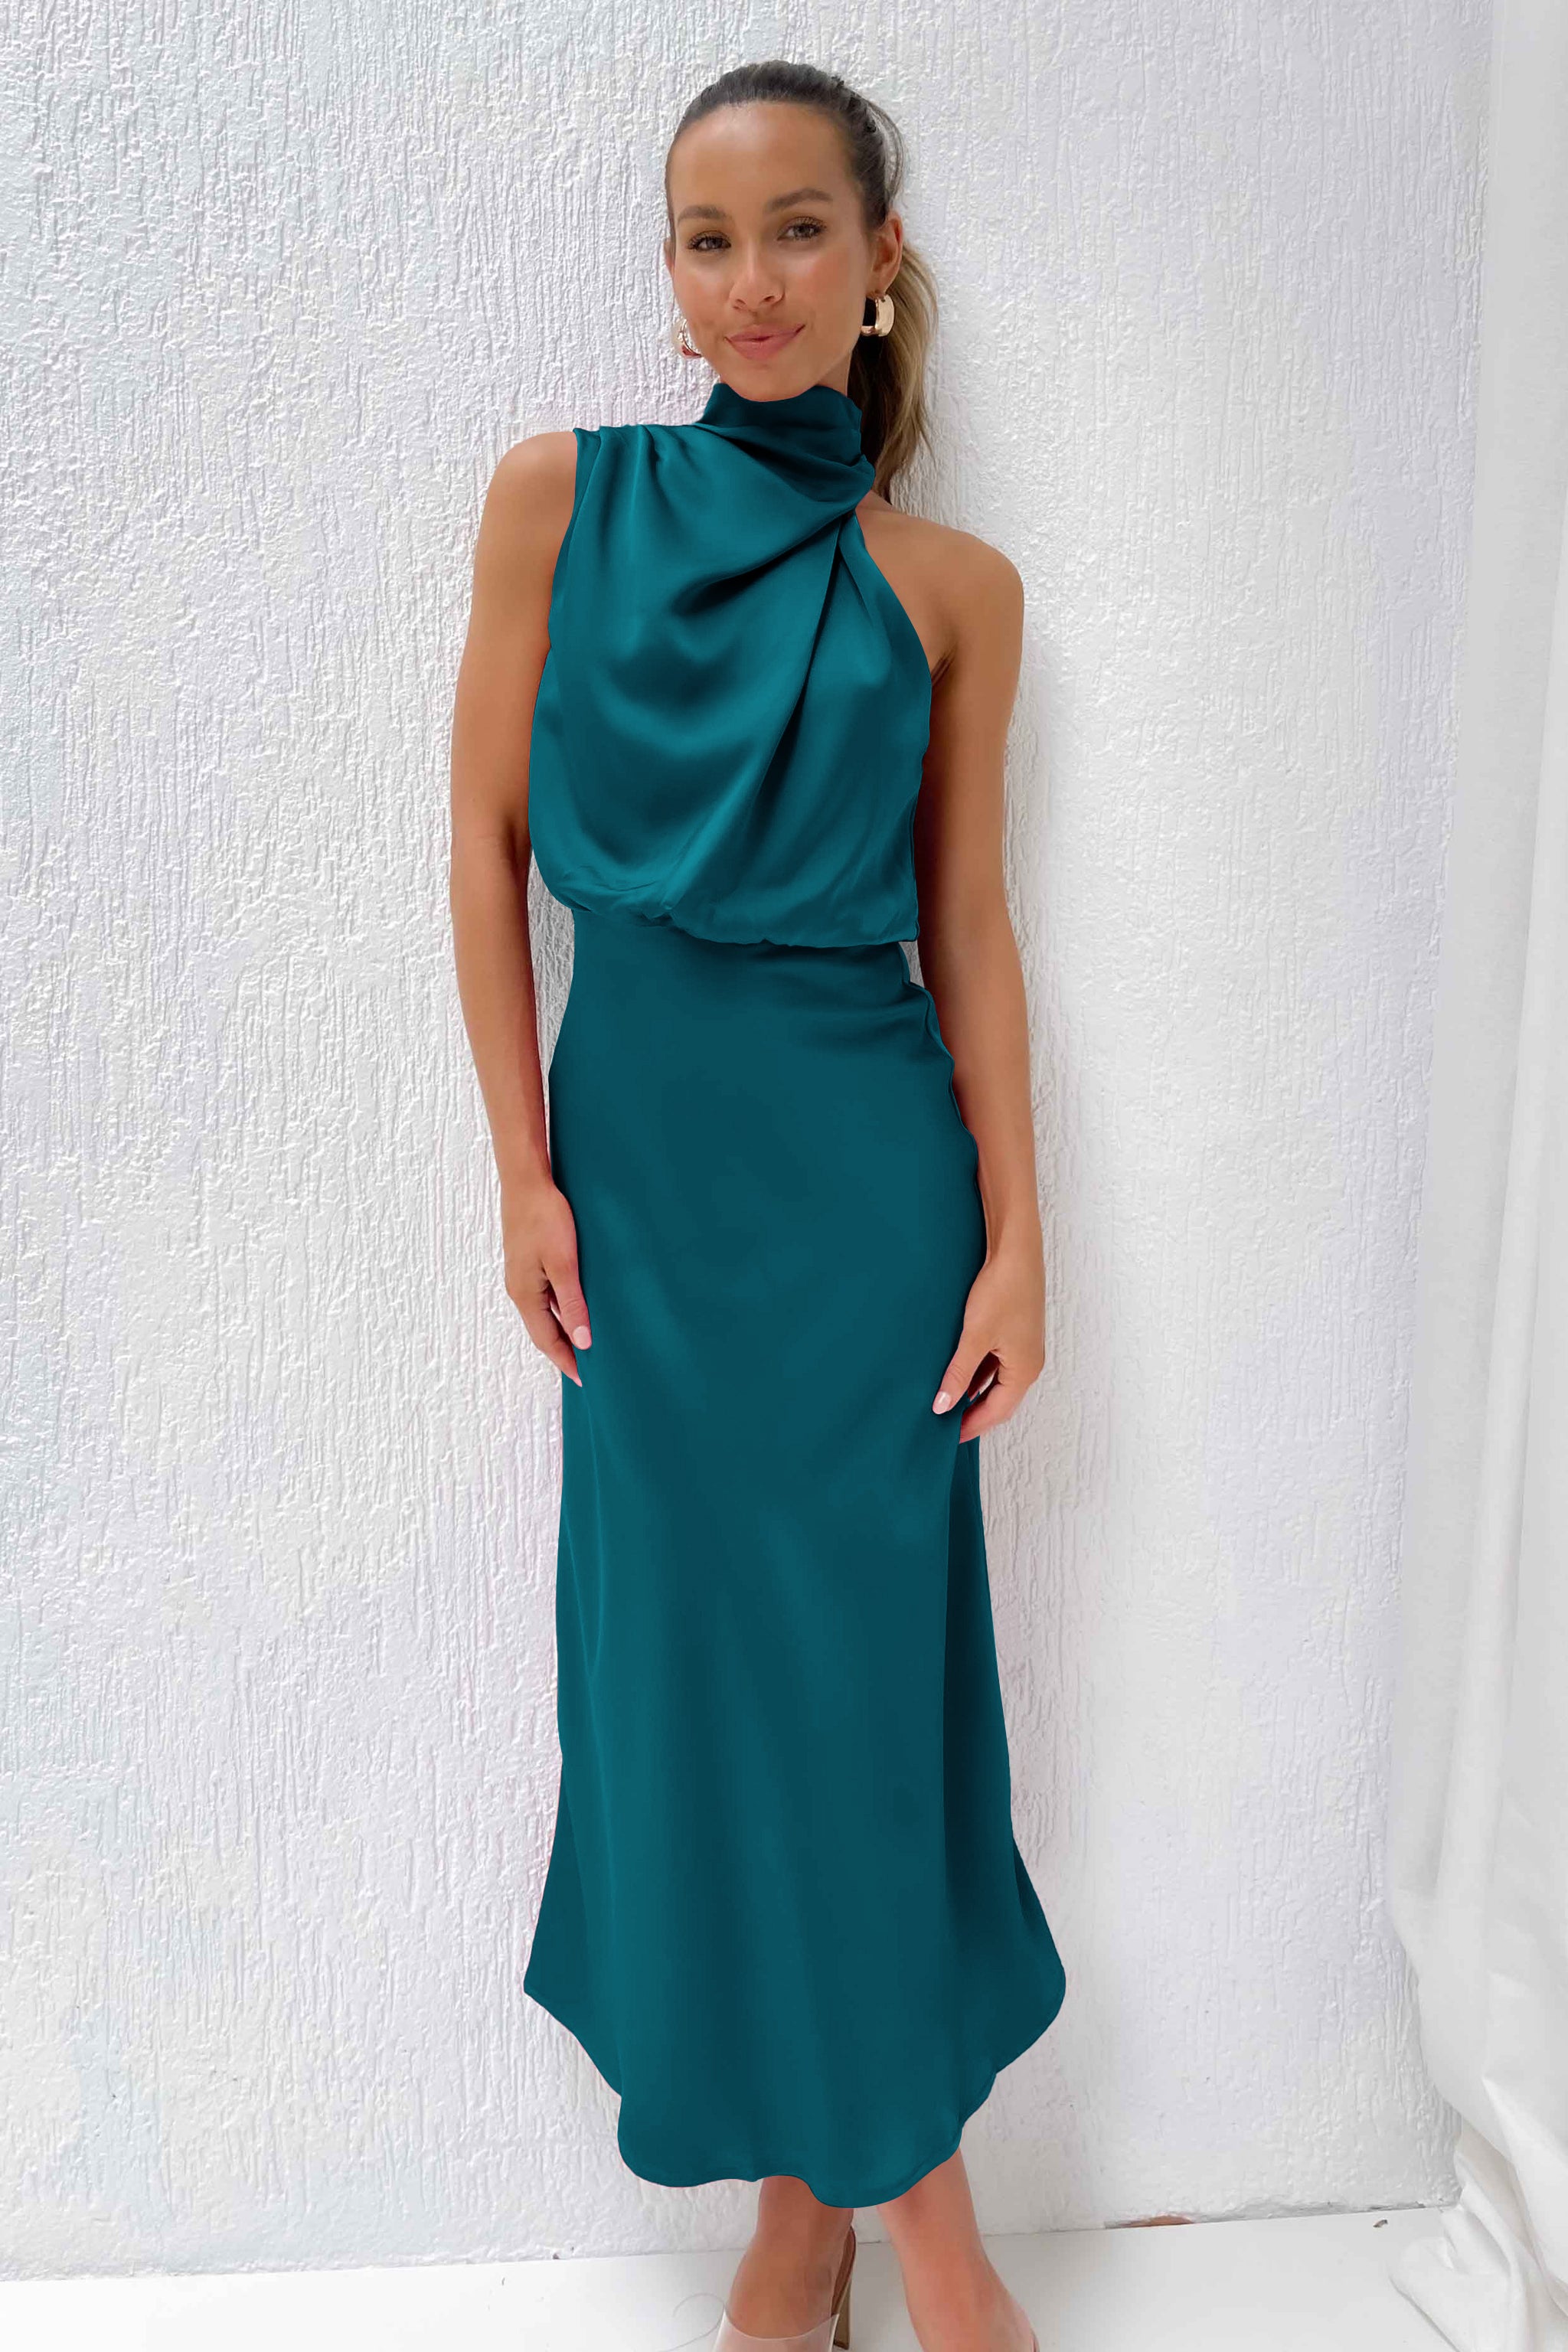 Turquoise Halter top Sleeveless Cocktail Dress